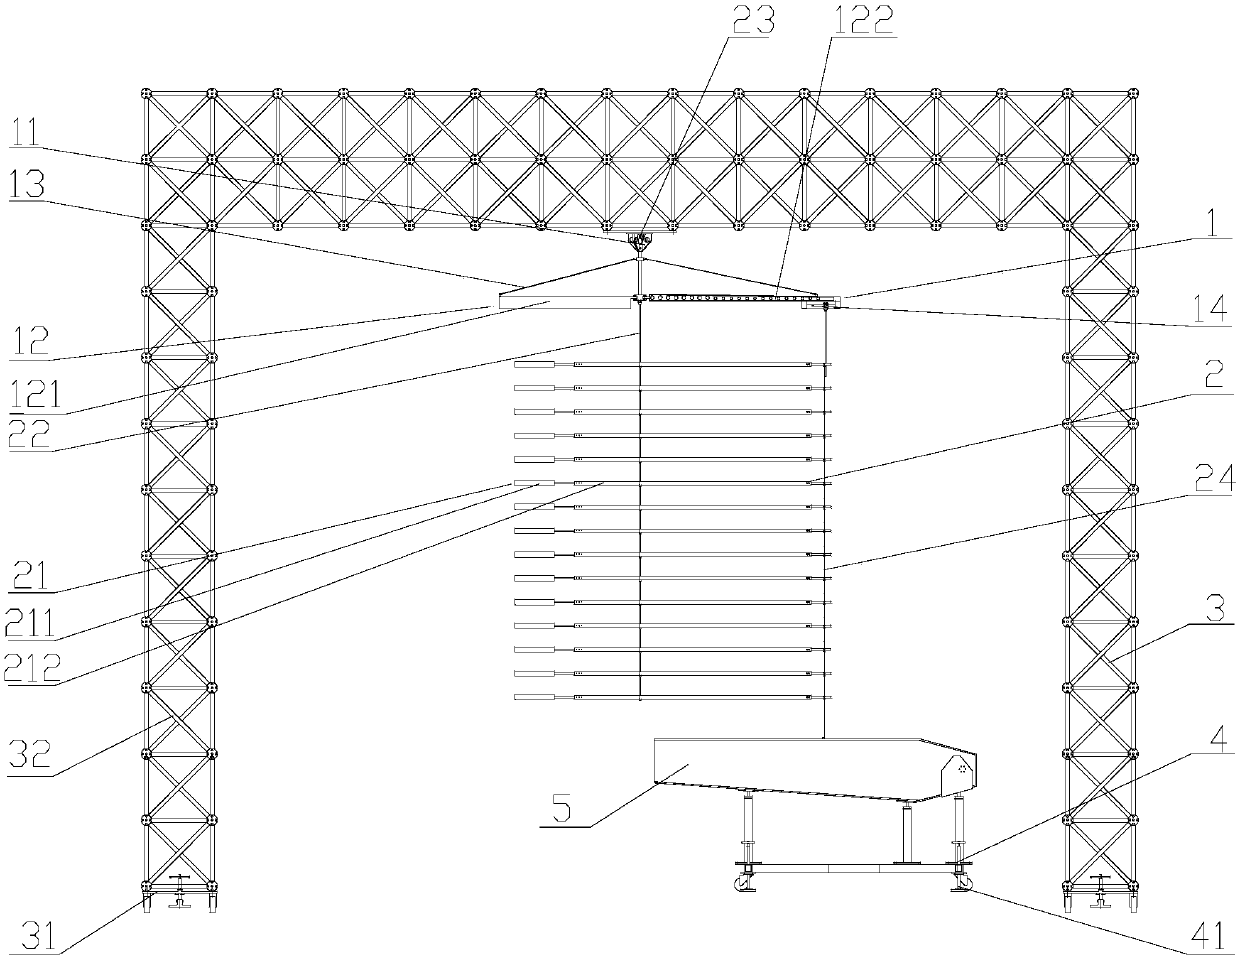 Steelyard type solar wing 360 degree zero-gravity unfolding system